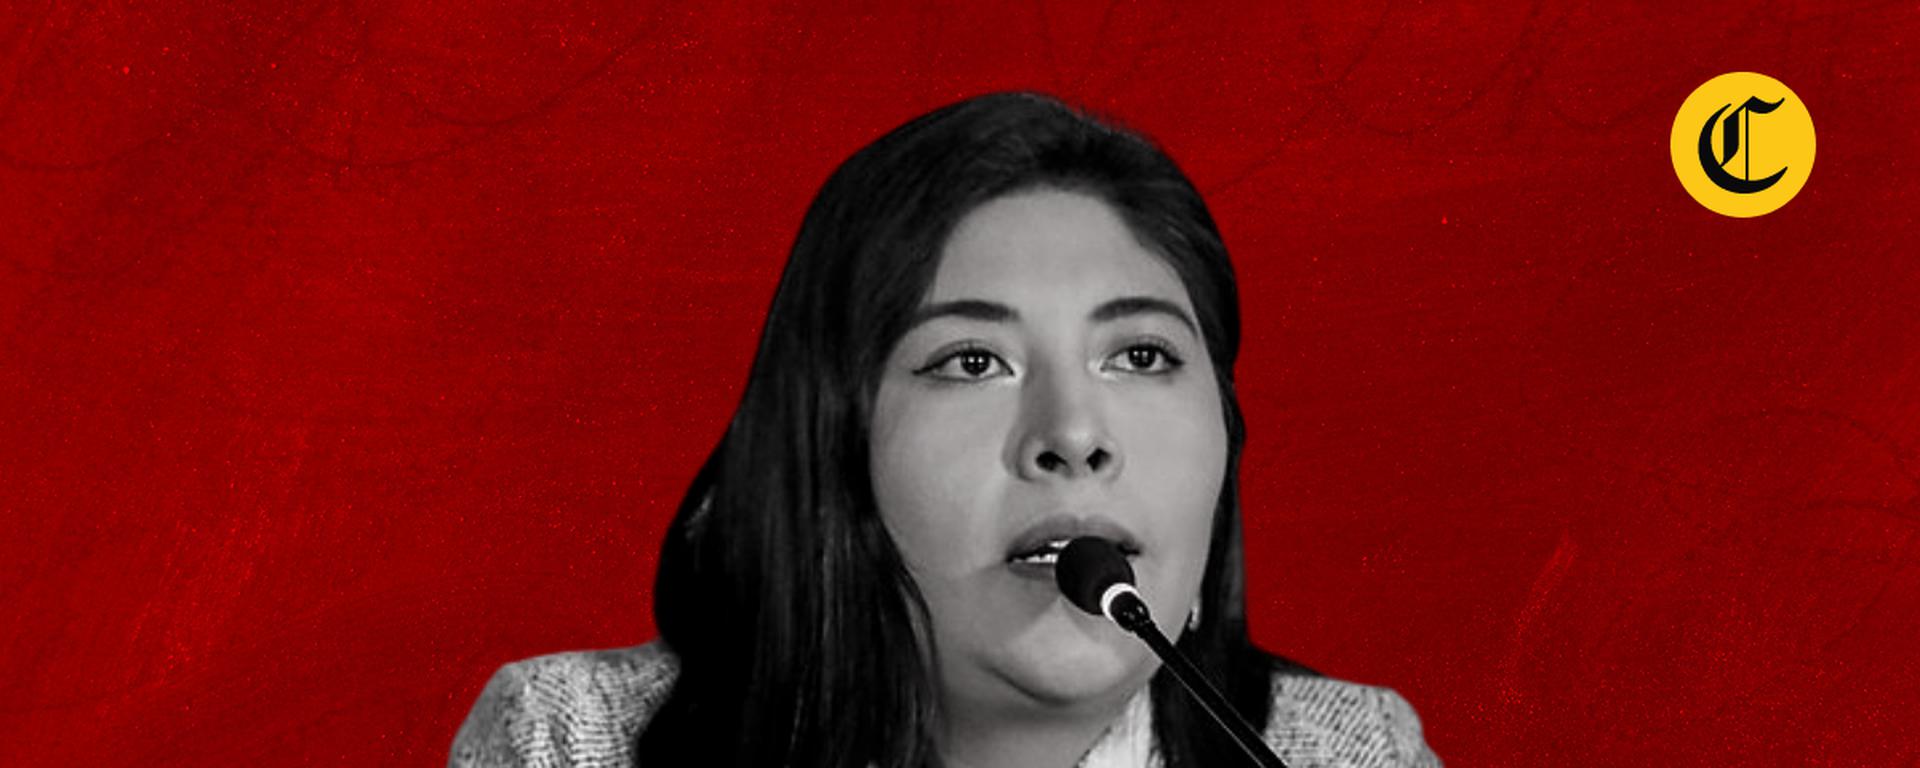 Betssy Chávez: las polémicas frases de su carrera política